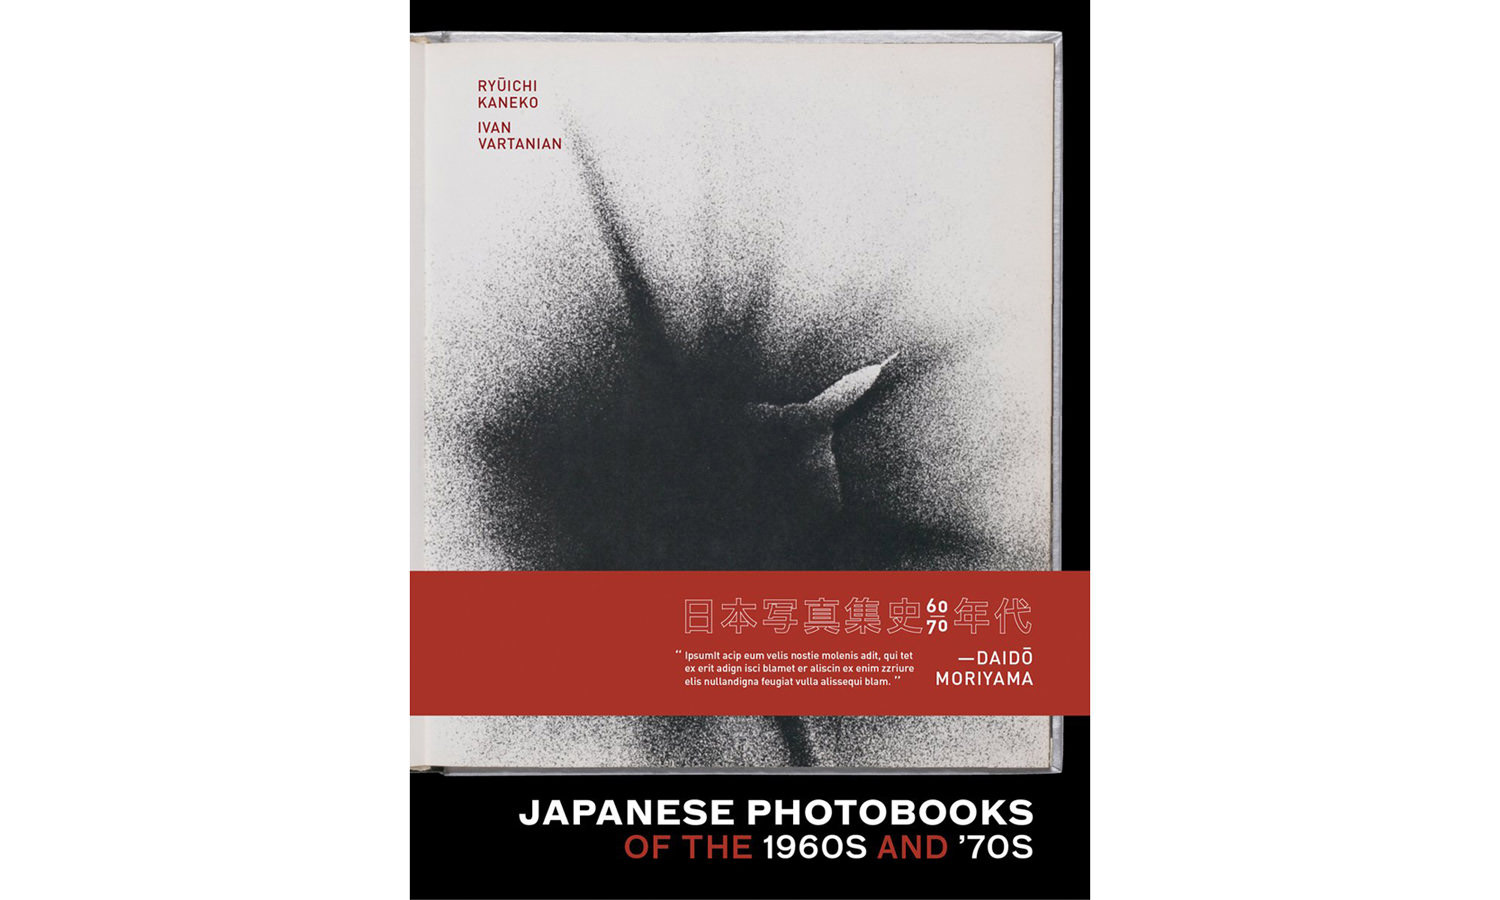 Japon - Photographie grand format & Album Photo Original , pendant